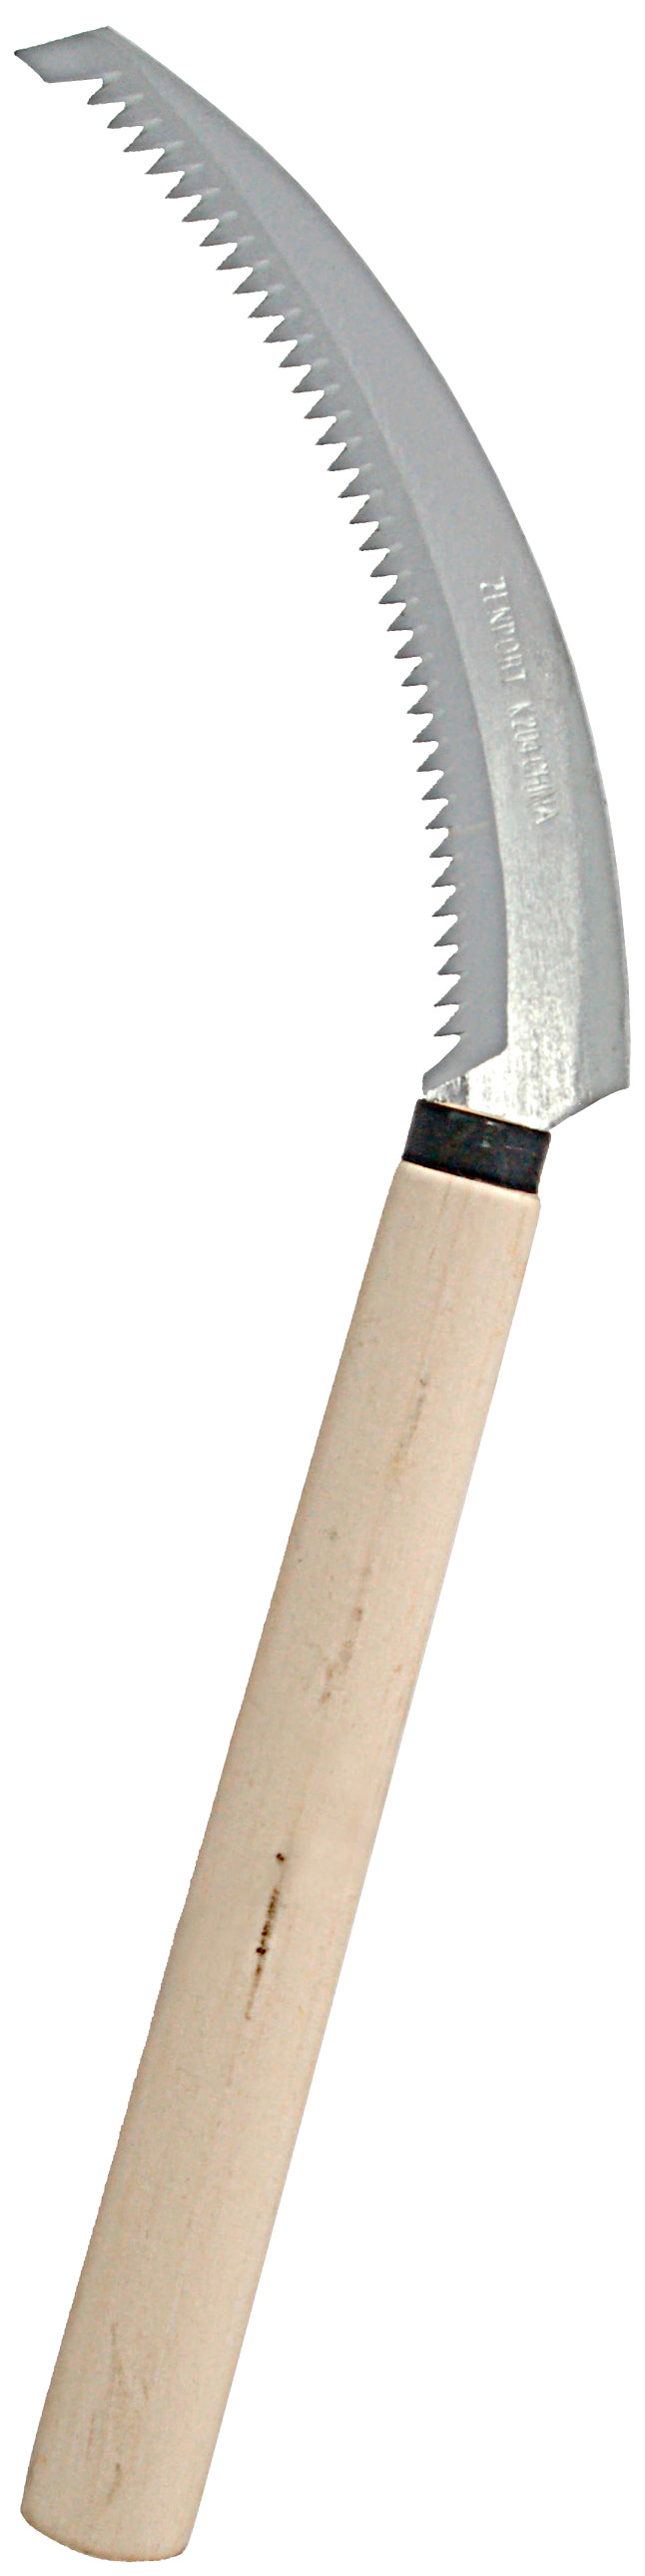 Zenport Sickle K204 Harvest Knife/Weeding Sickle, Wood Handle, Serrated, Japanese, A+ Grade, Stainless Steel, 6.5-Inch Blade